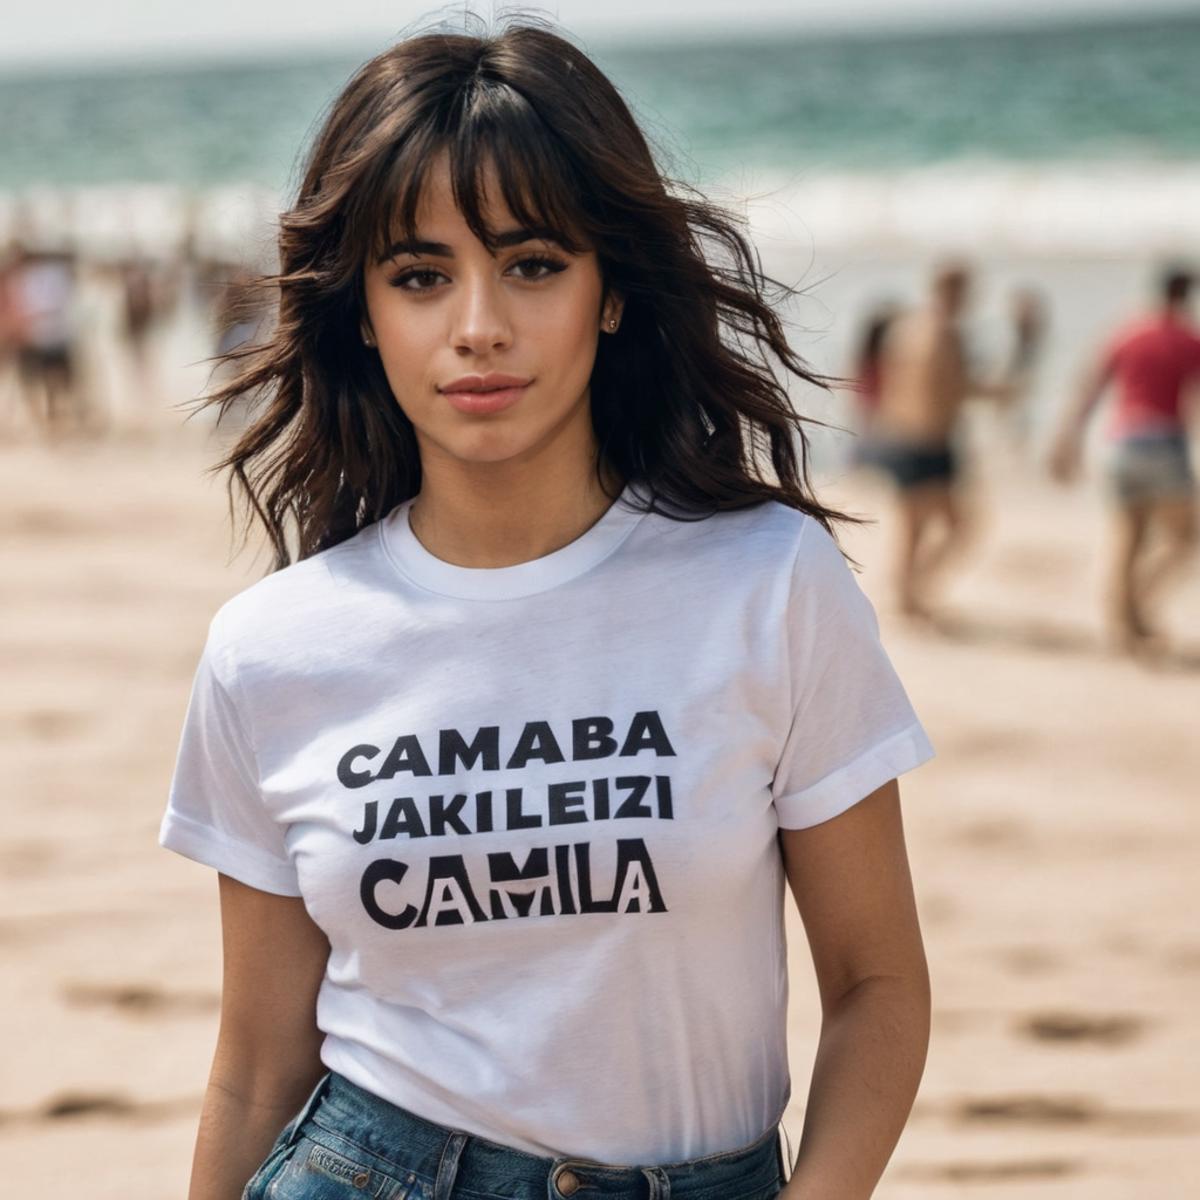 Camila Cabello SDXL image by tomdvs